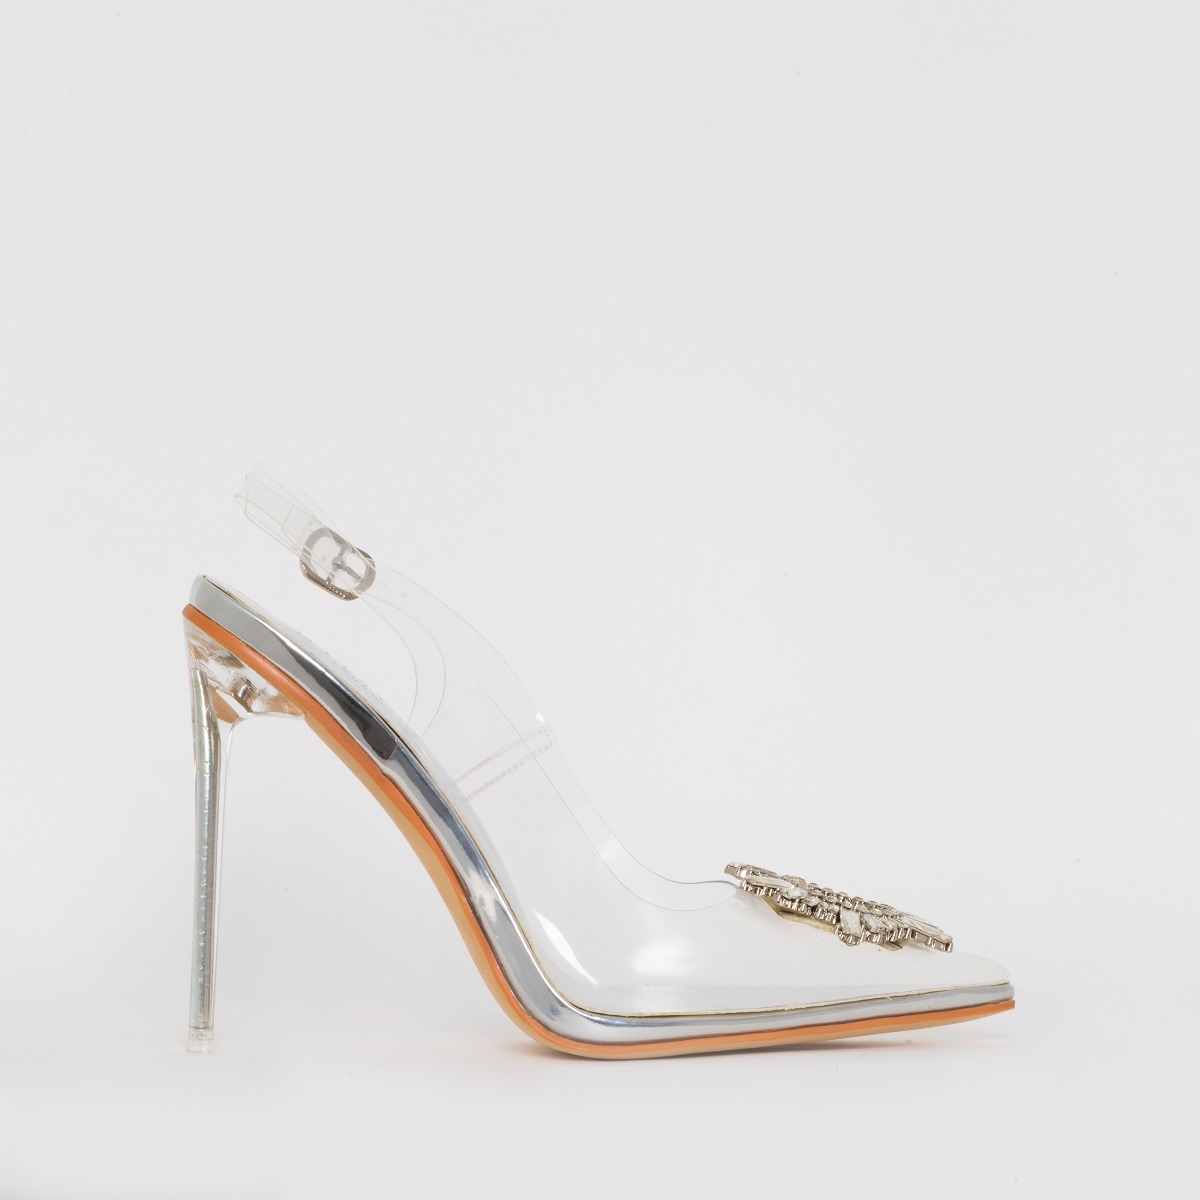 1950s clear heels - Gem